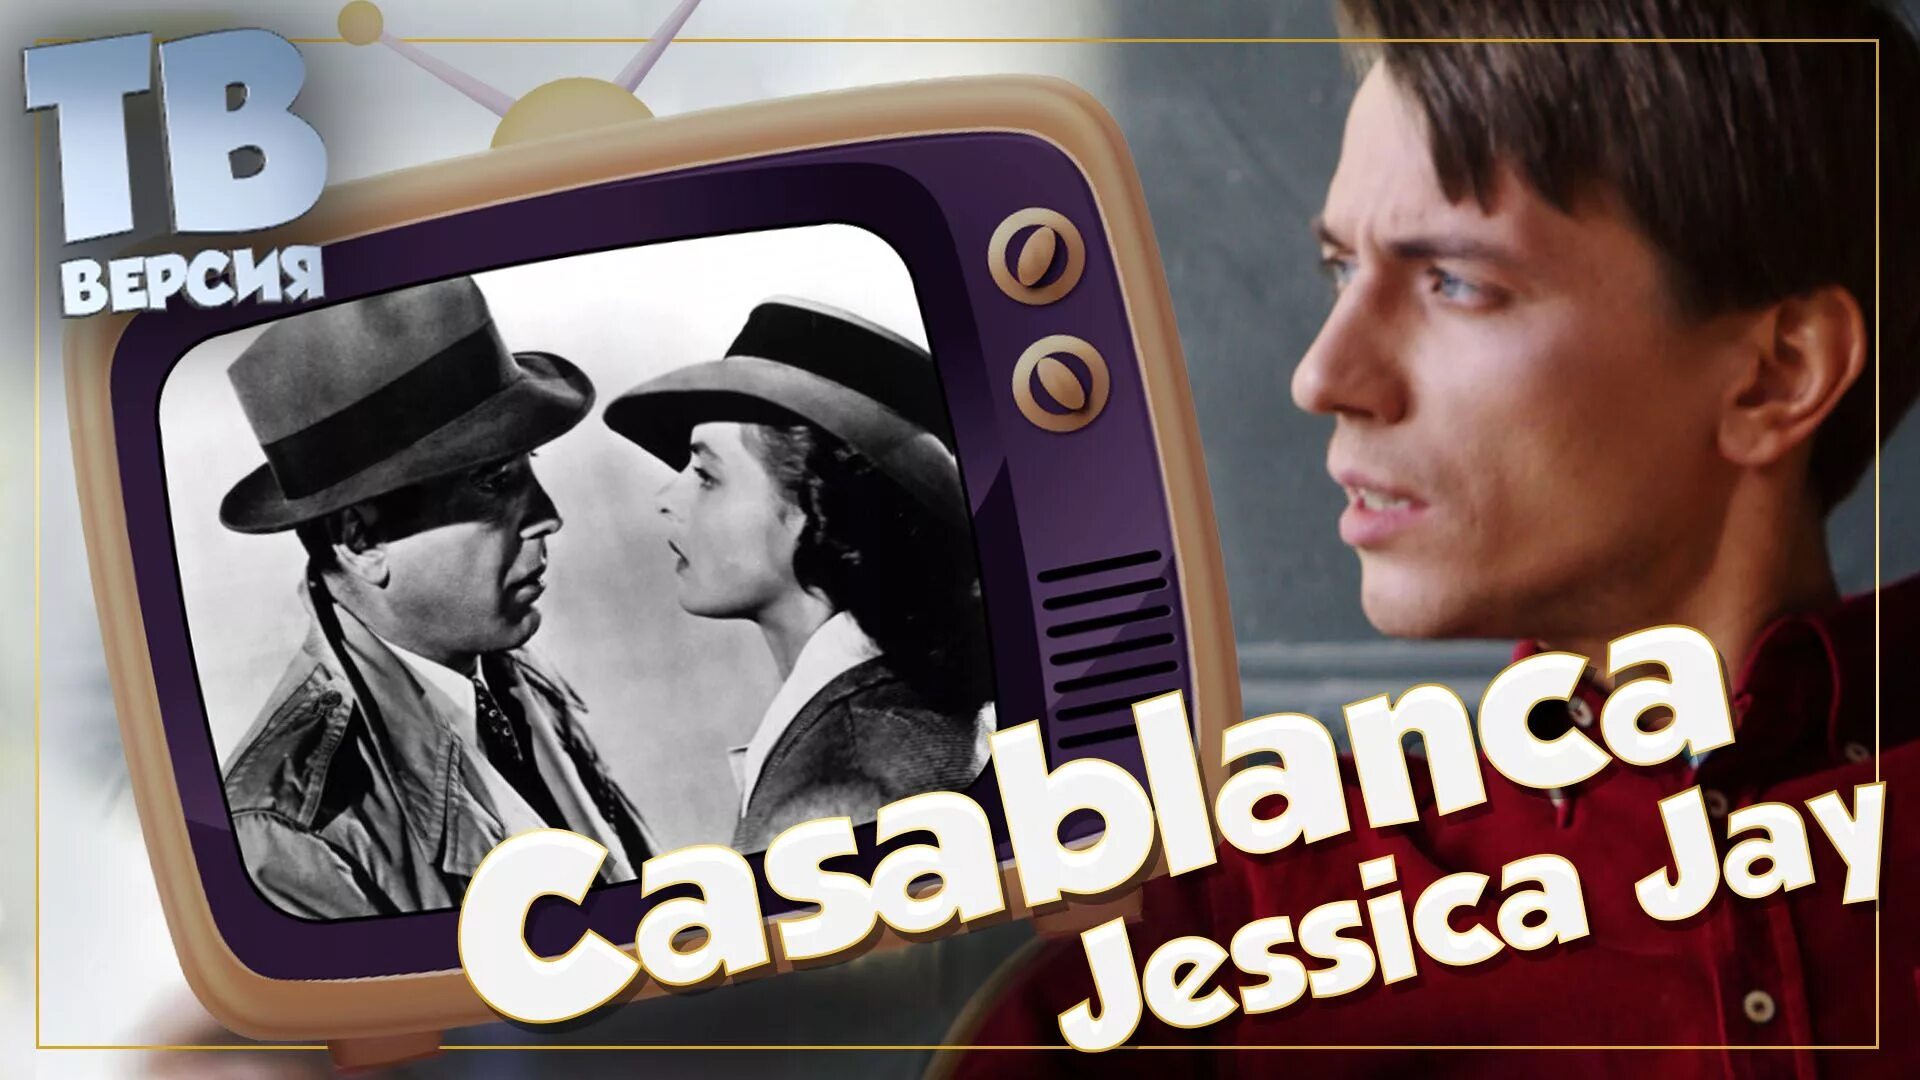 Jessica Jay Касабланка. Casablanca песня. Рингтон касабланка